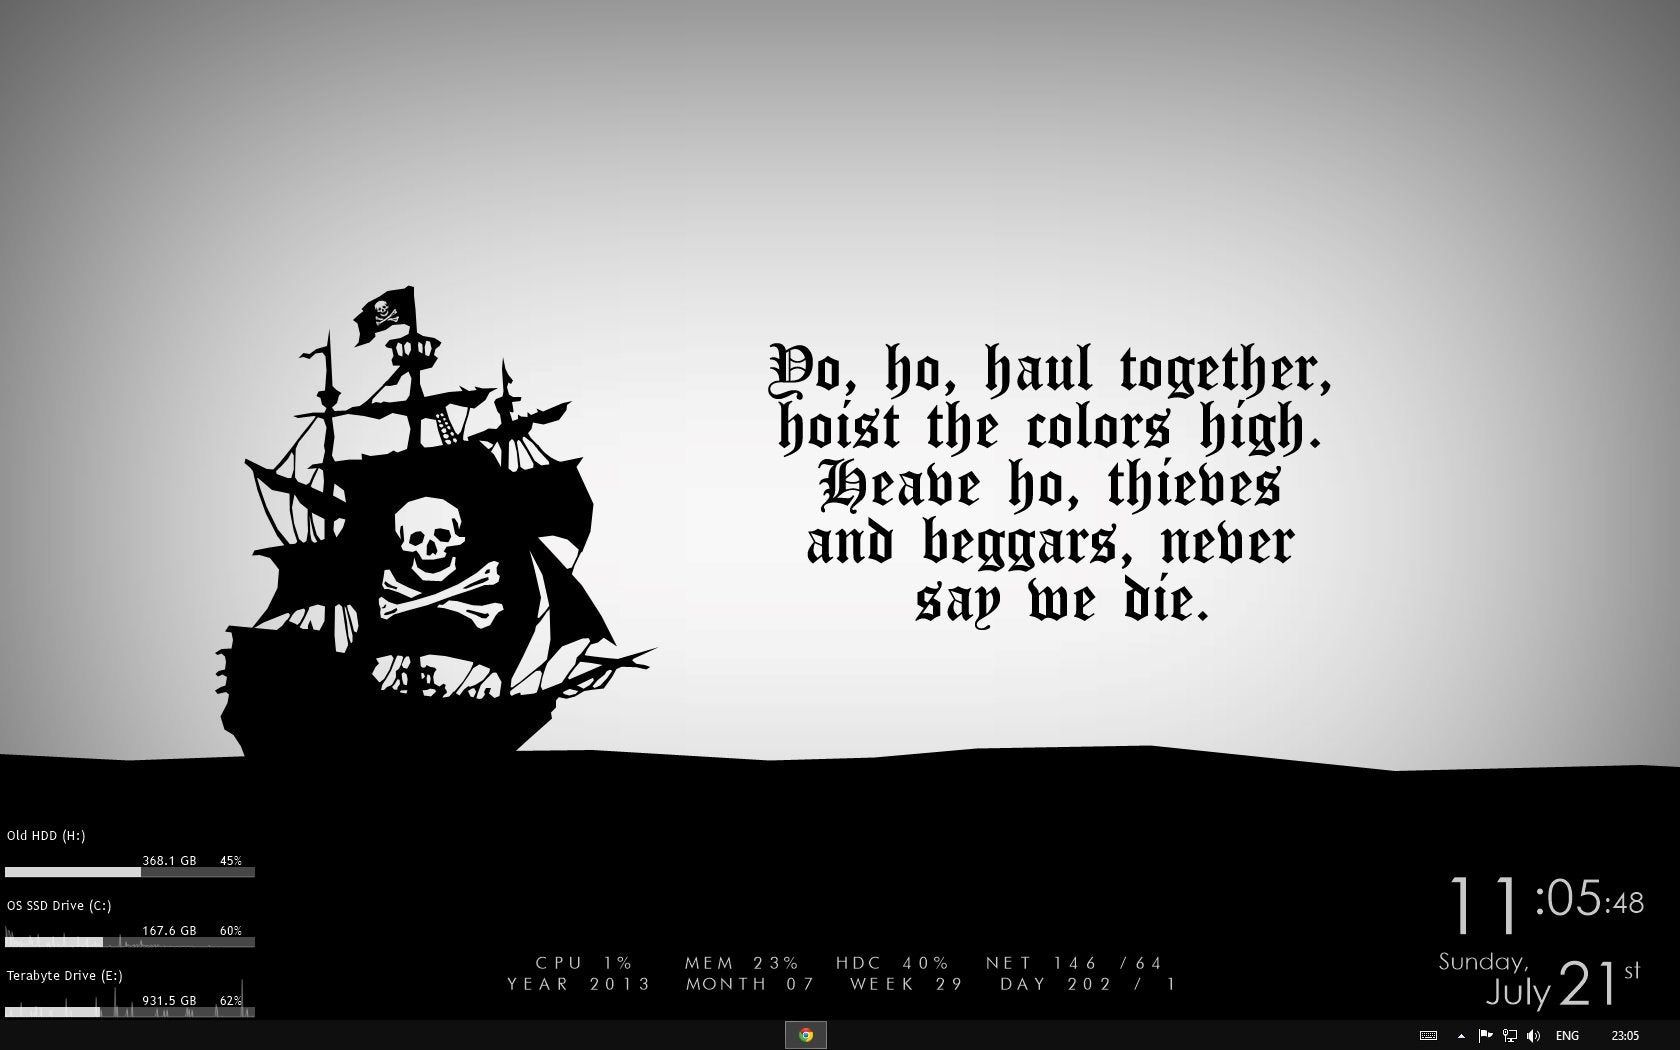 Pirates never say die